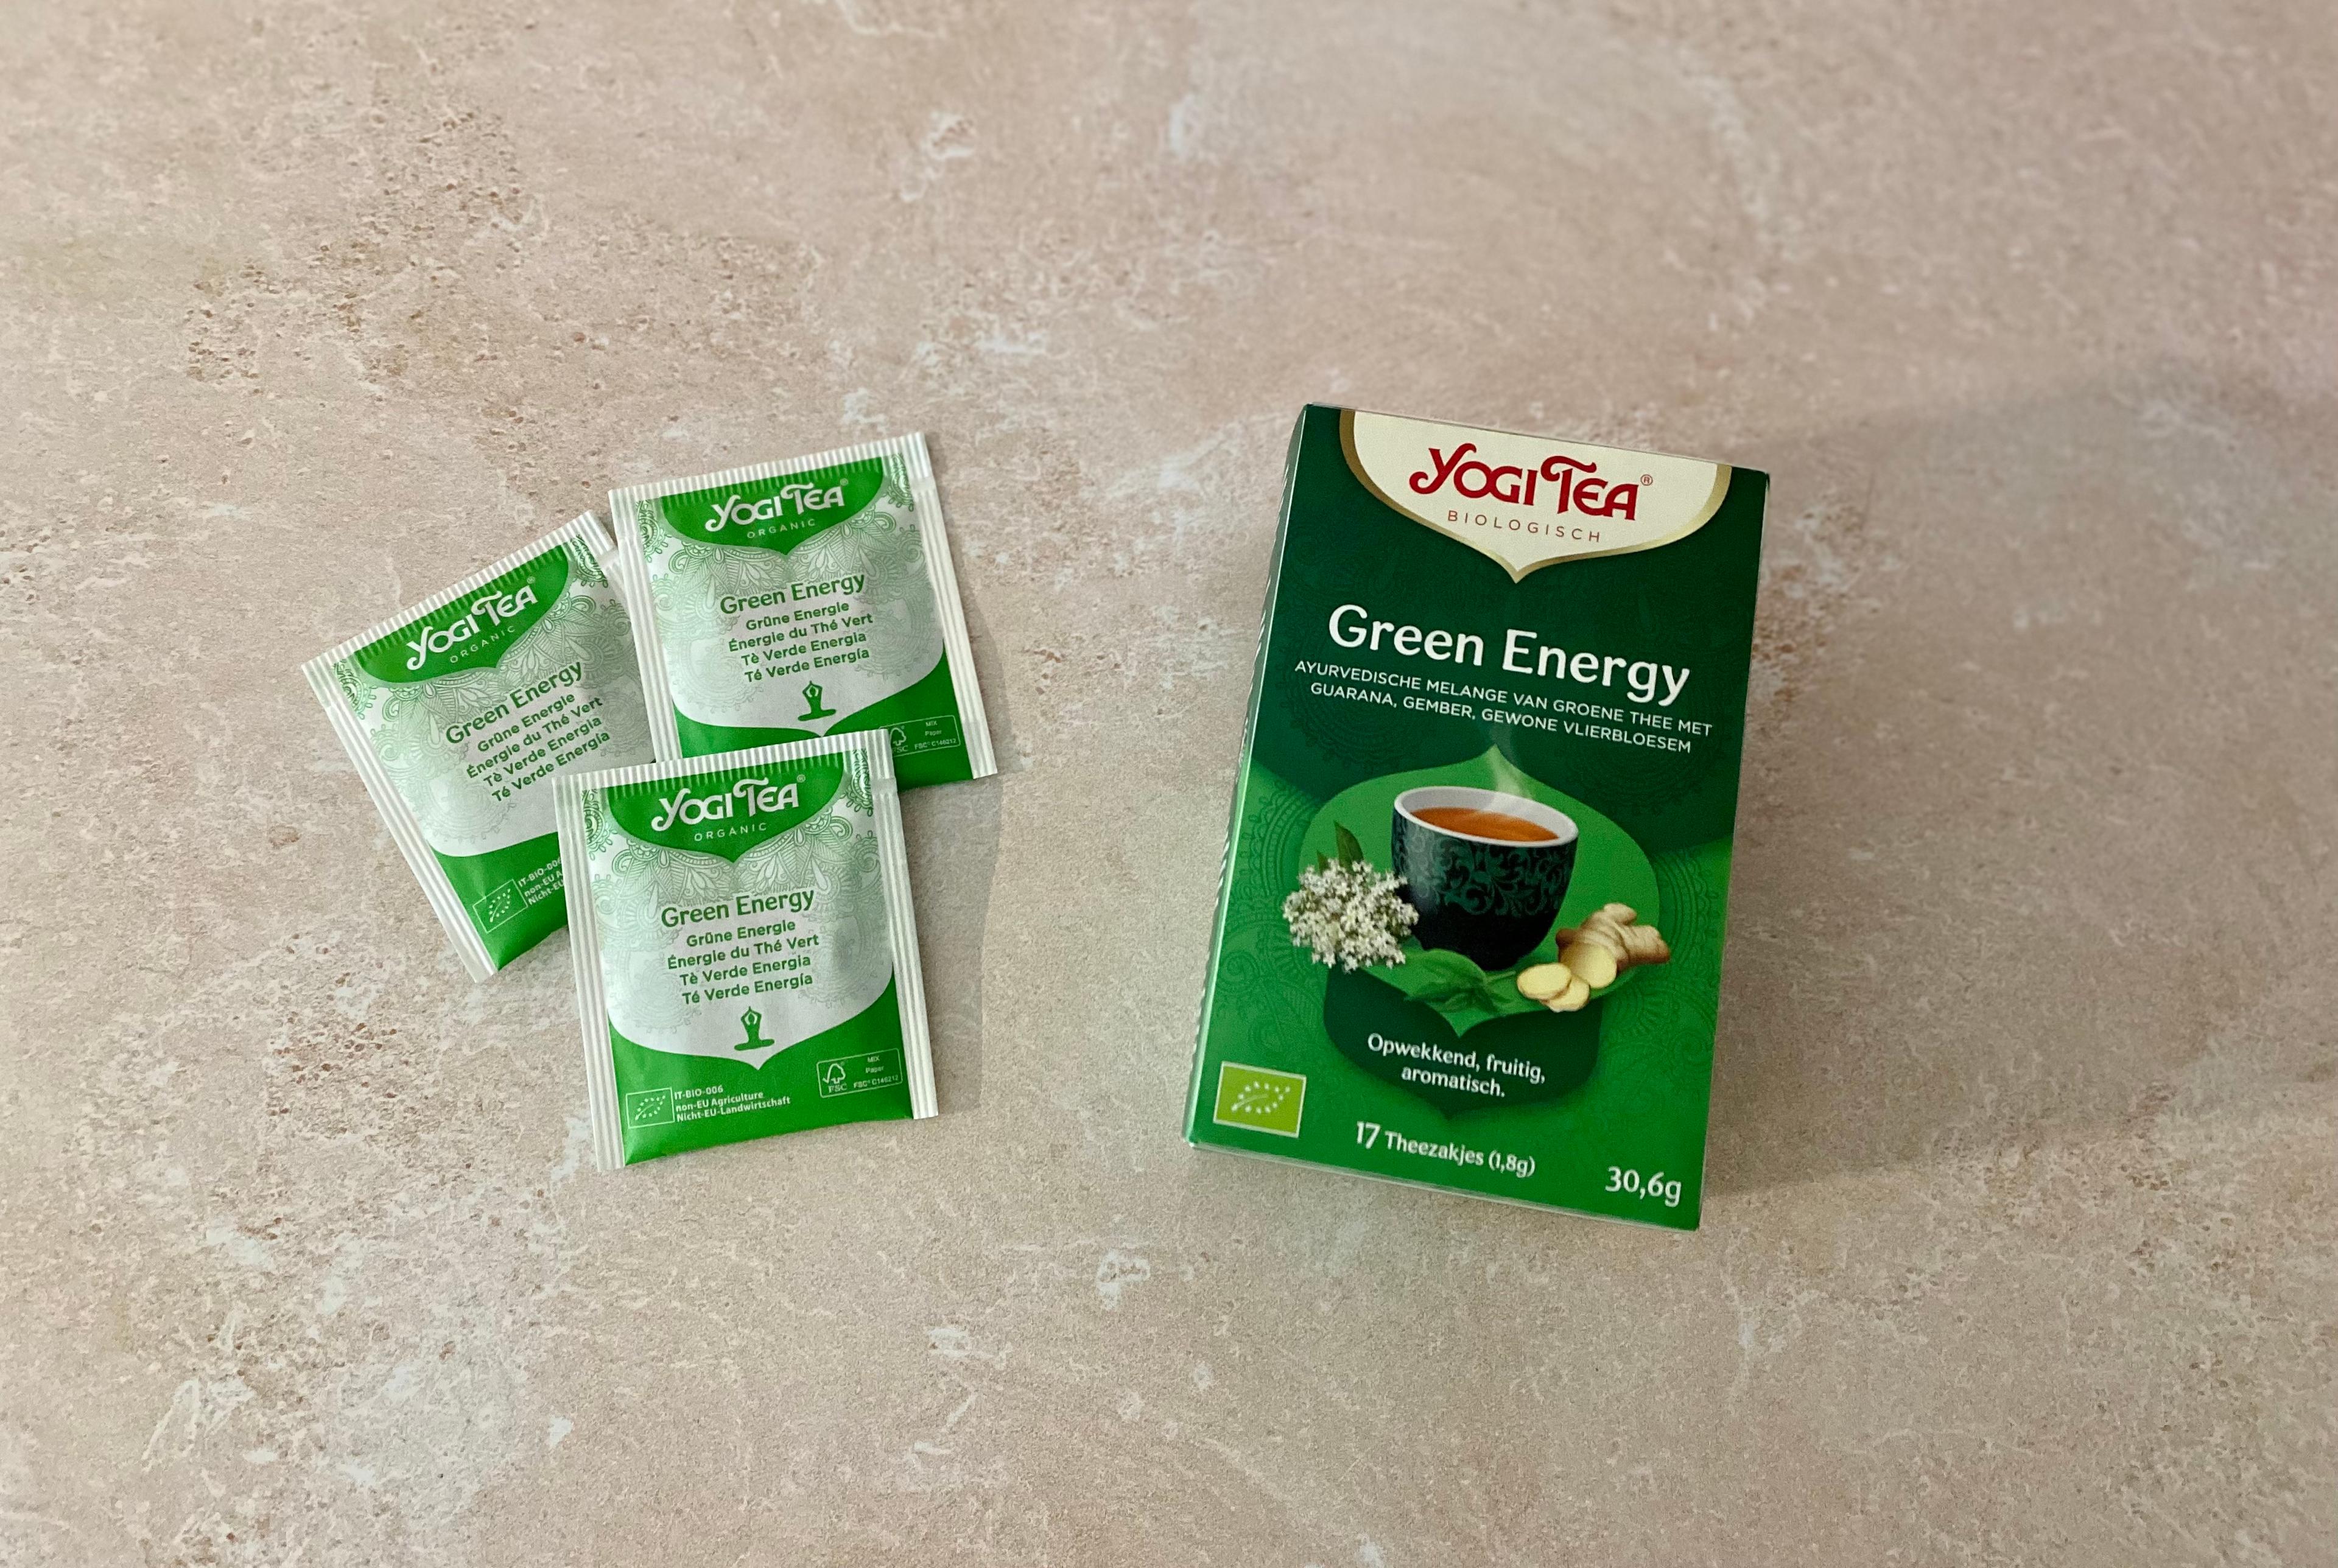 Yogi Tea - Infusion Energie du thé vert bio